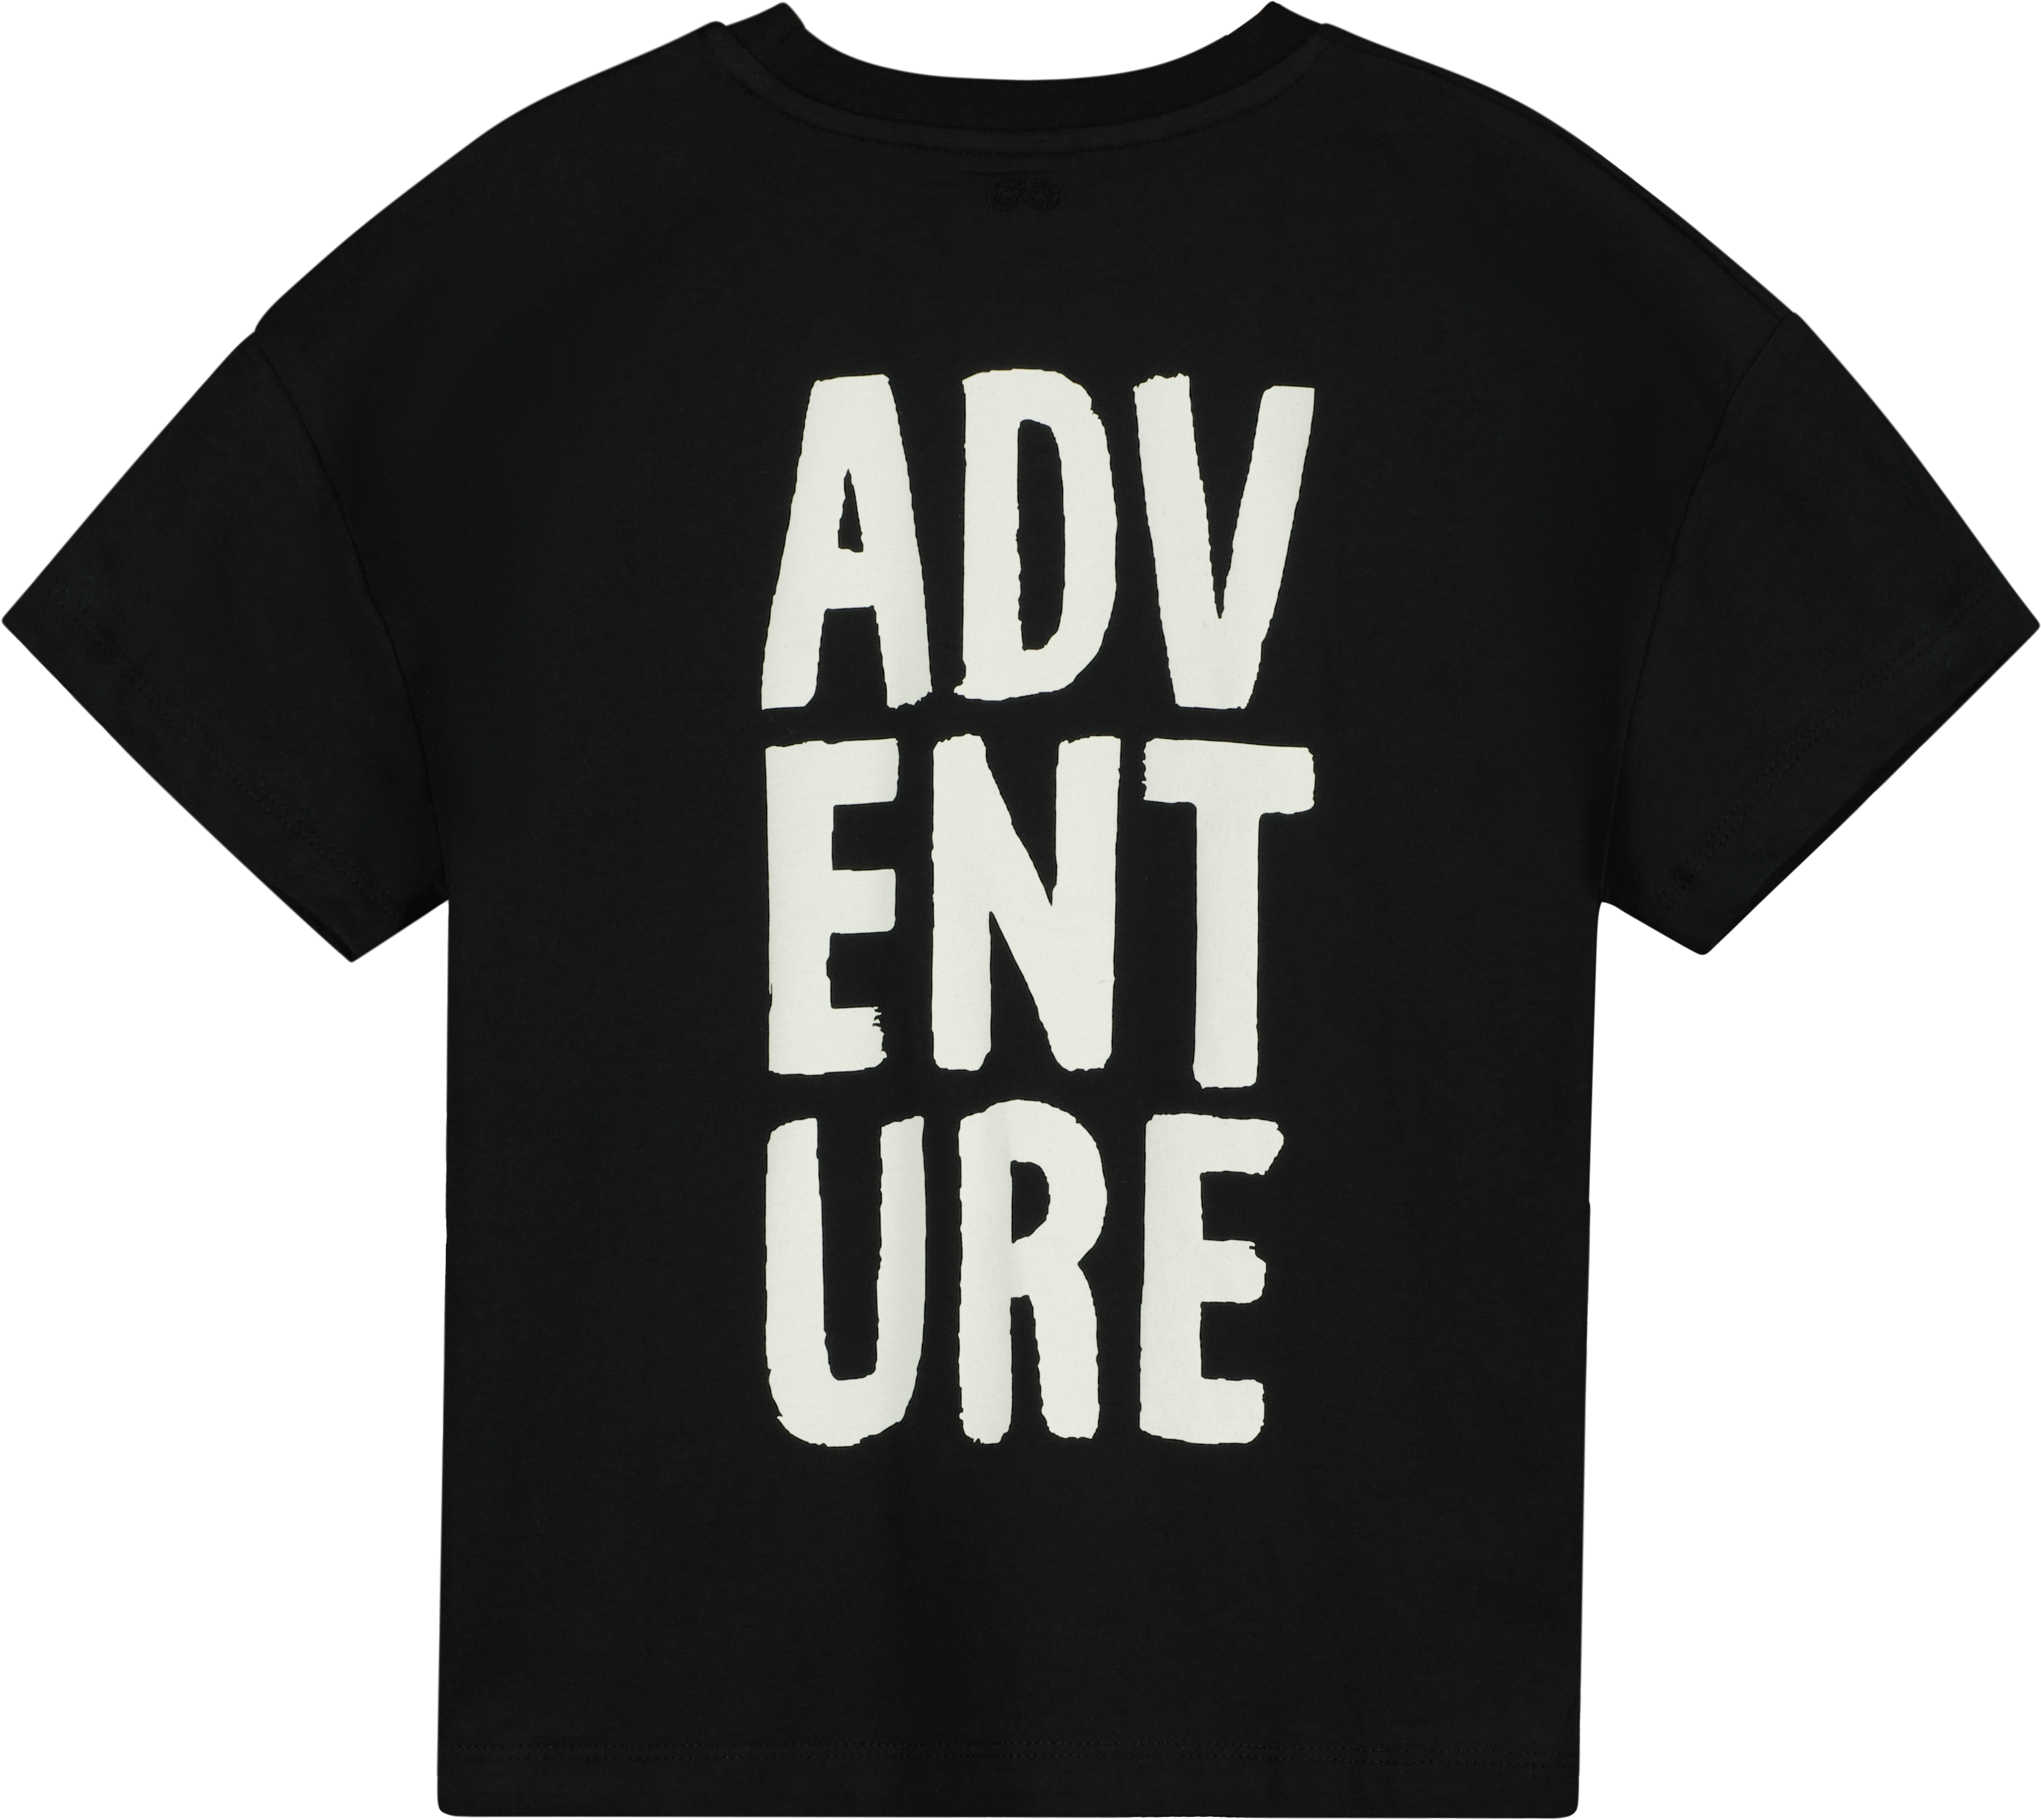 Black Oversized 'Adventure' T-shirt - BL023